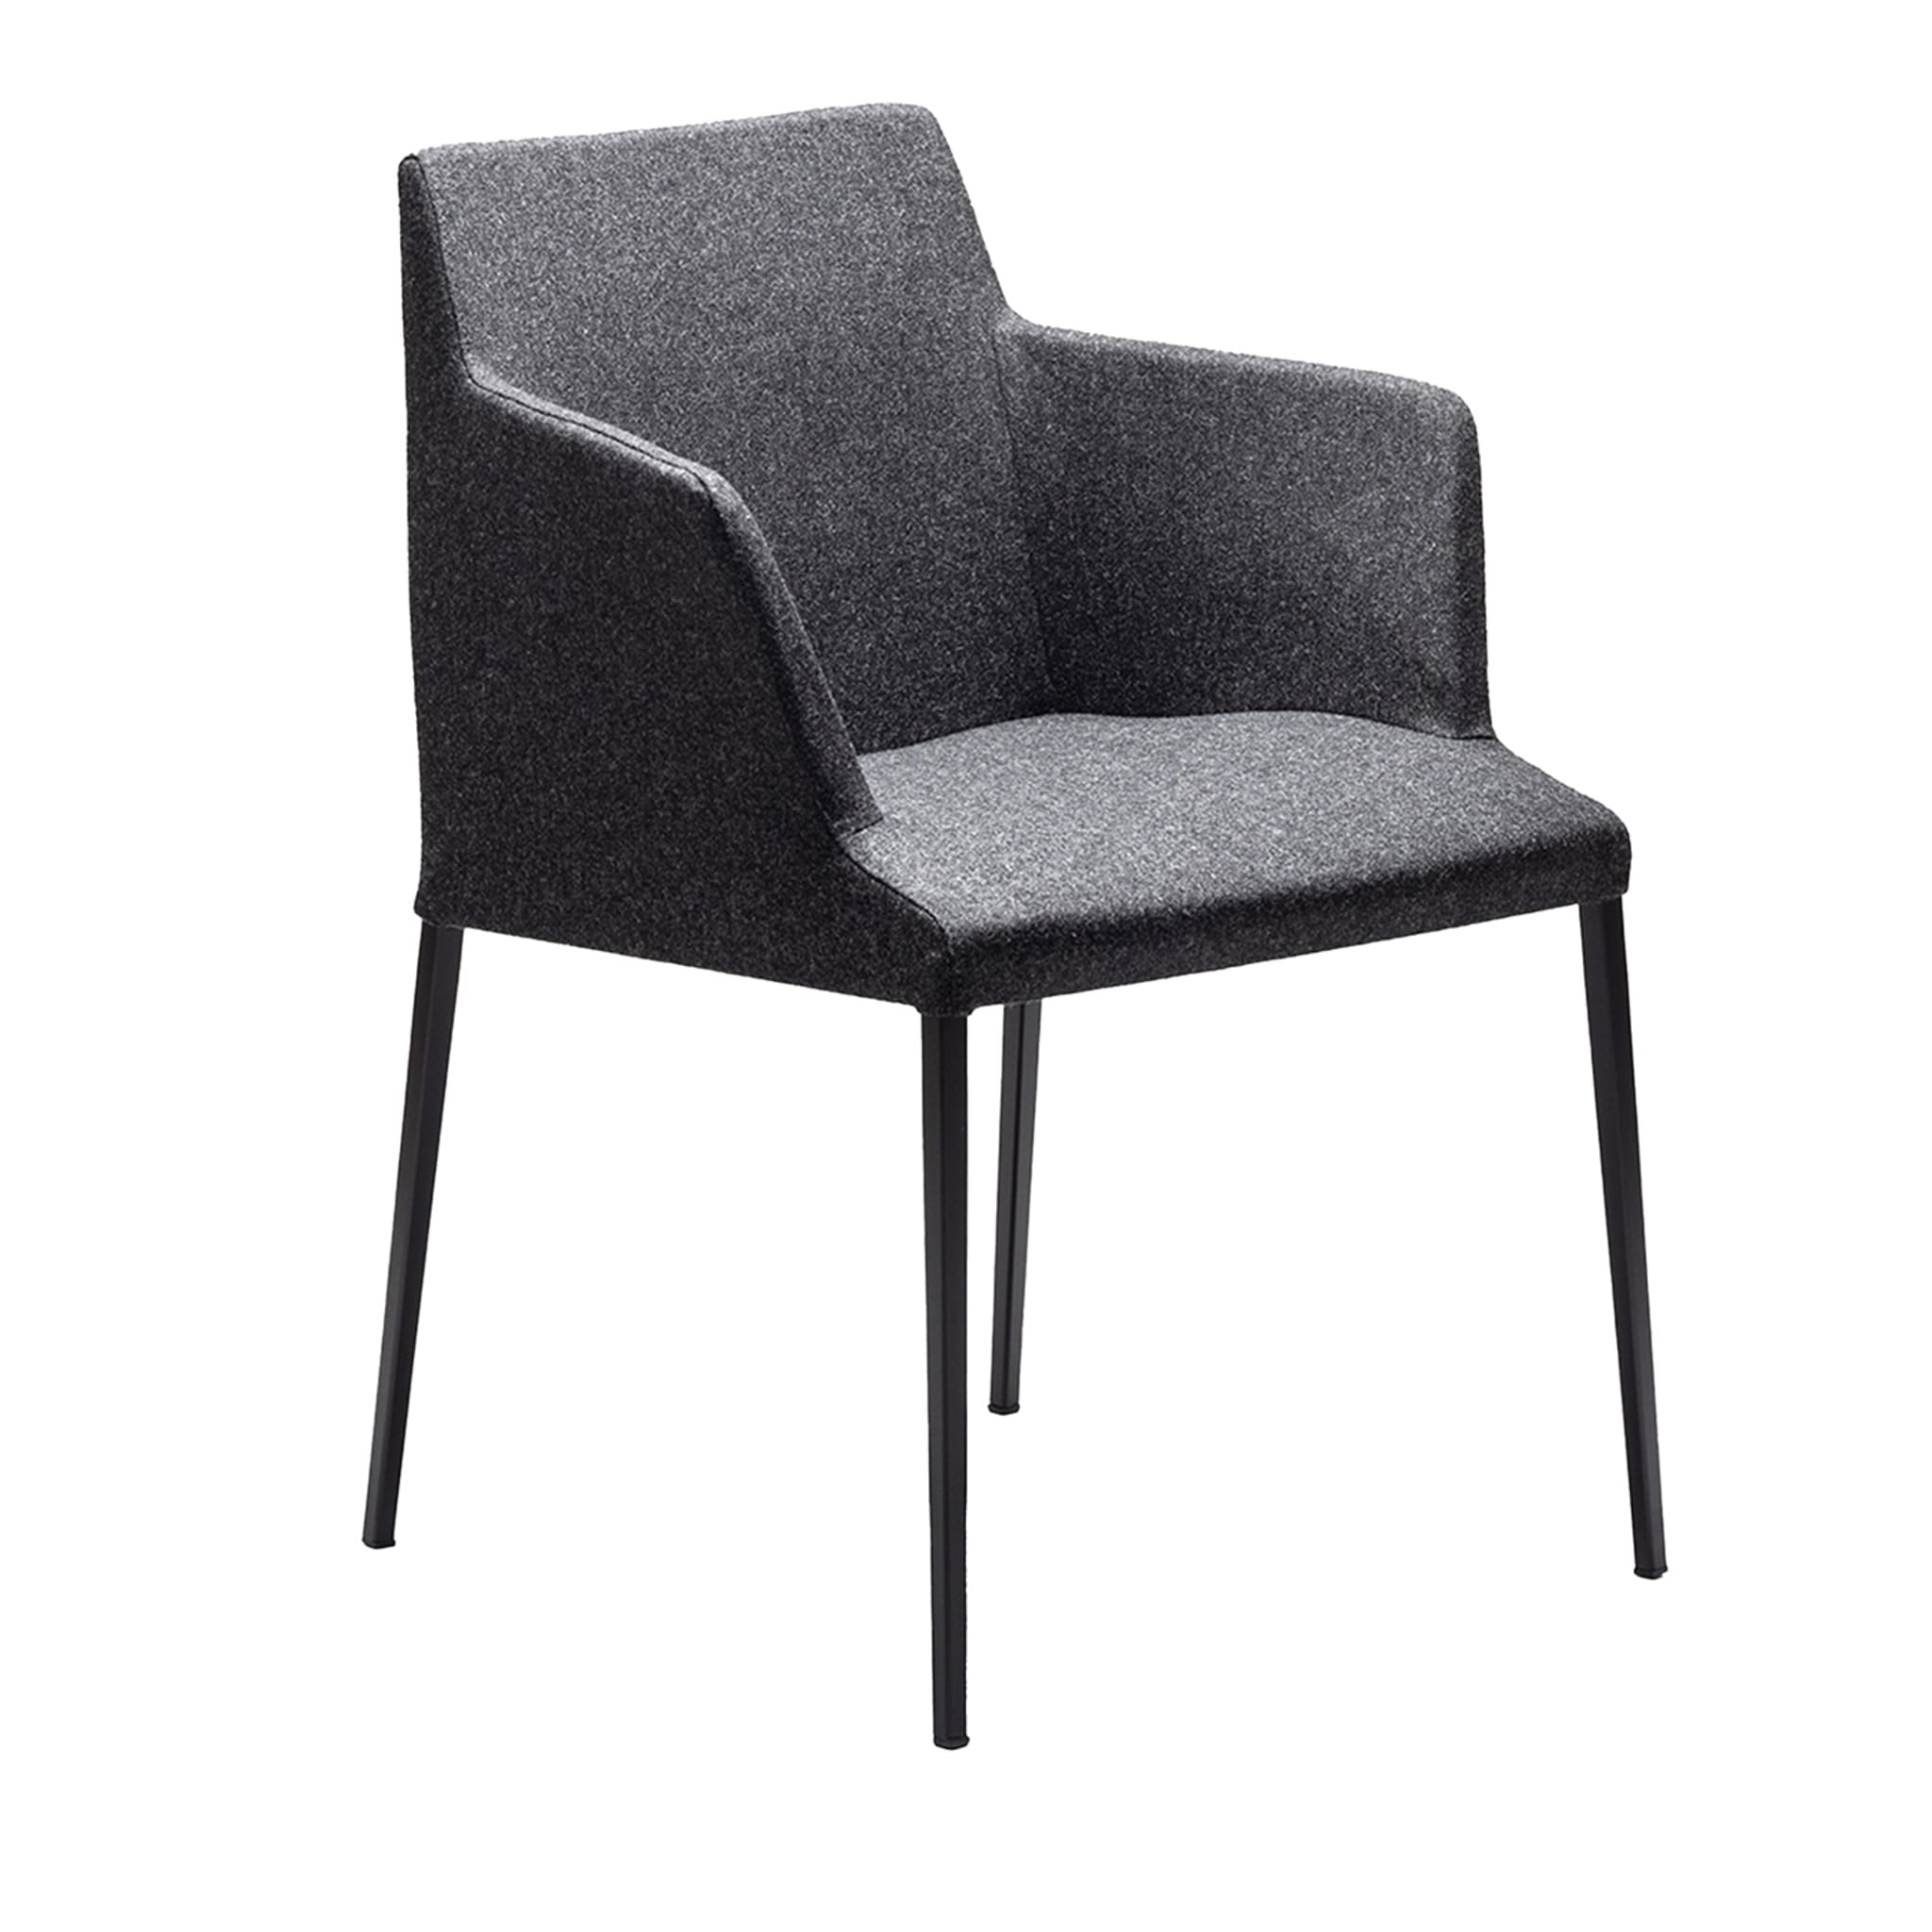 Bloom MP Gray Chair by Dario Delpin - Main view